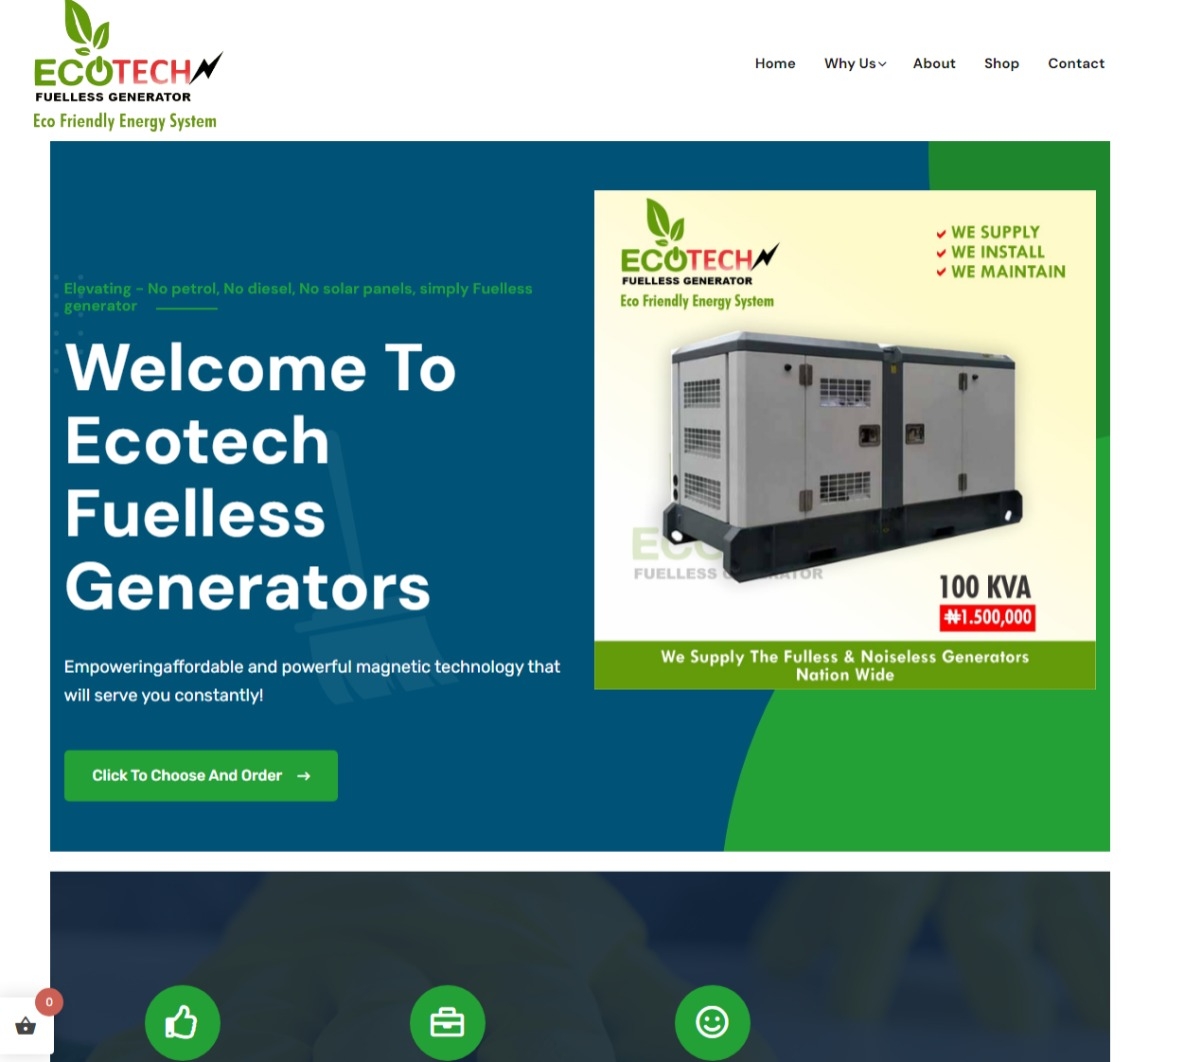 Ecotech generators company website i develop for a client.